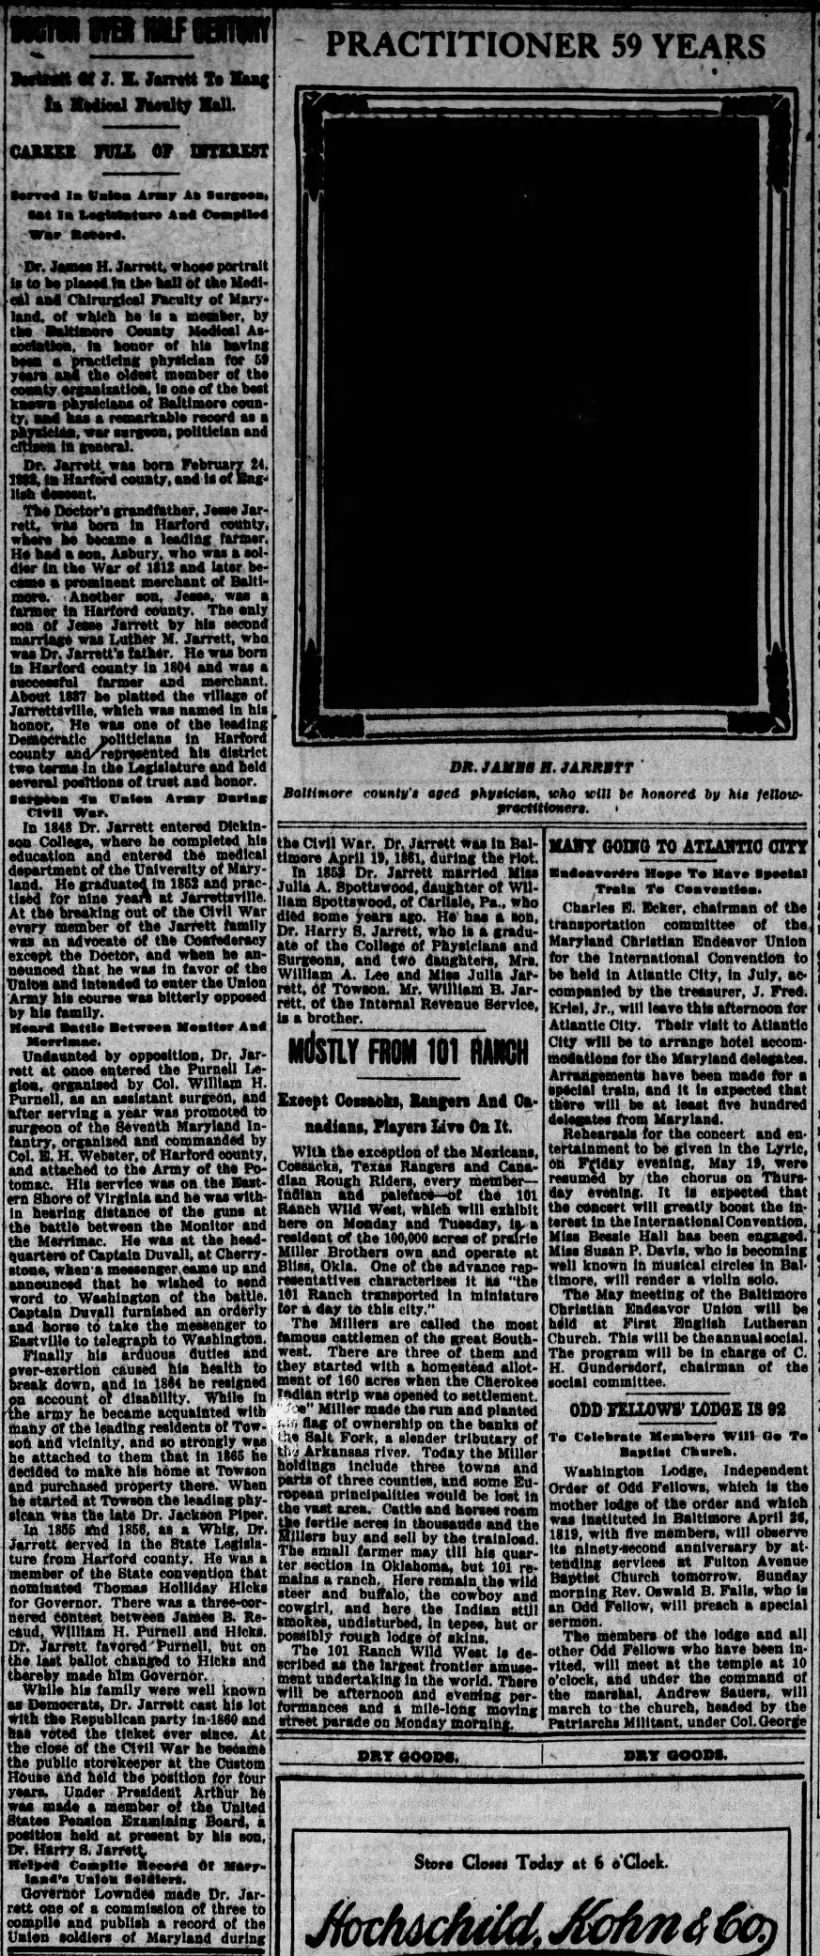 Doctor Over Half Century; 22 Apr 1911; The Evening Sun; 3